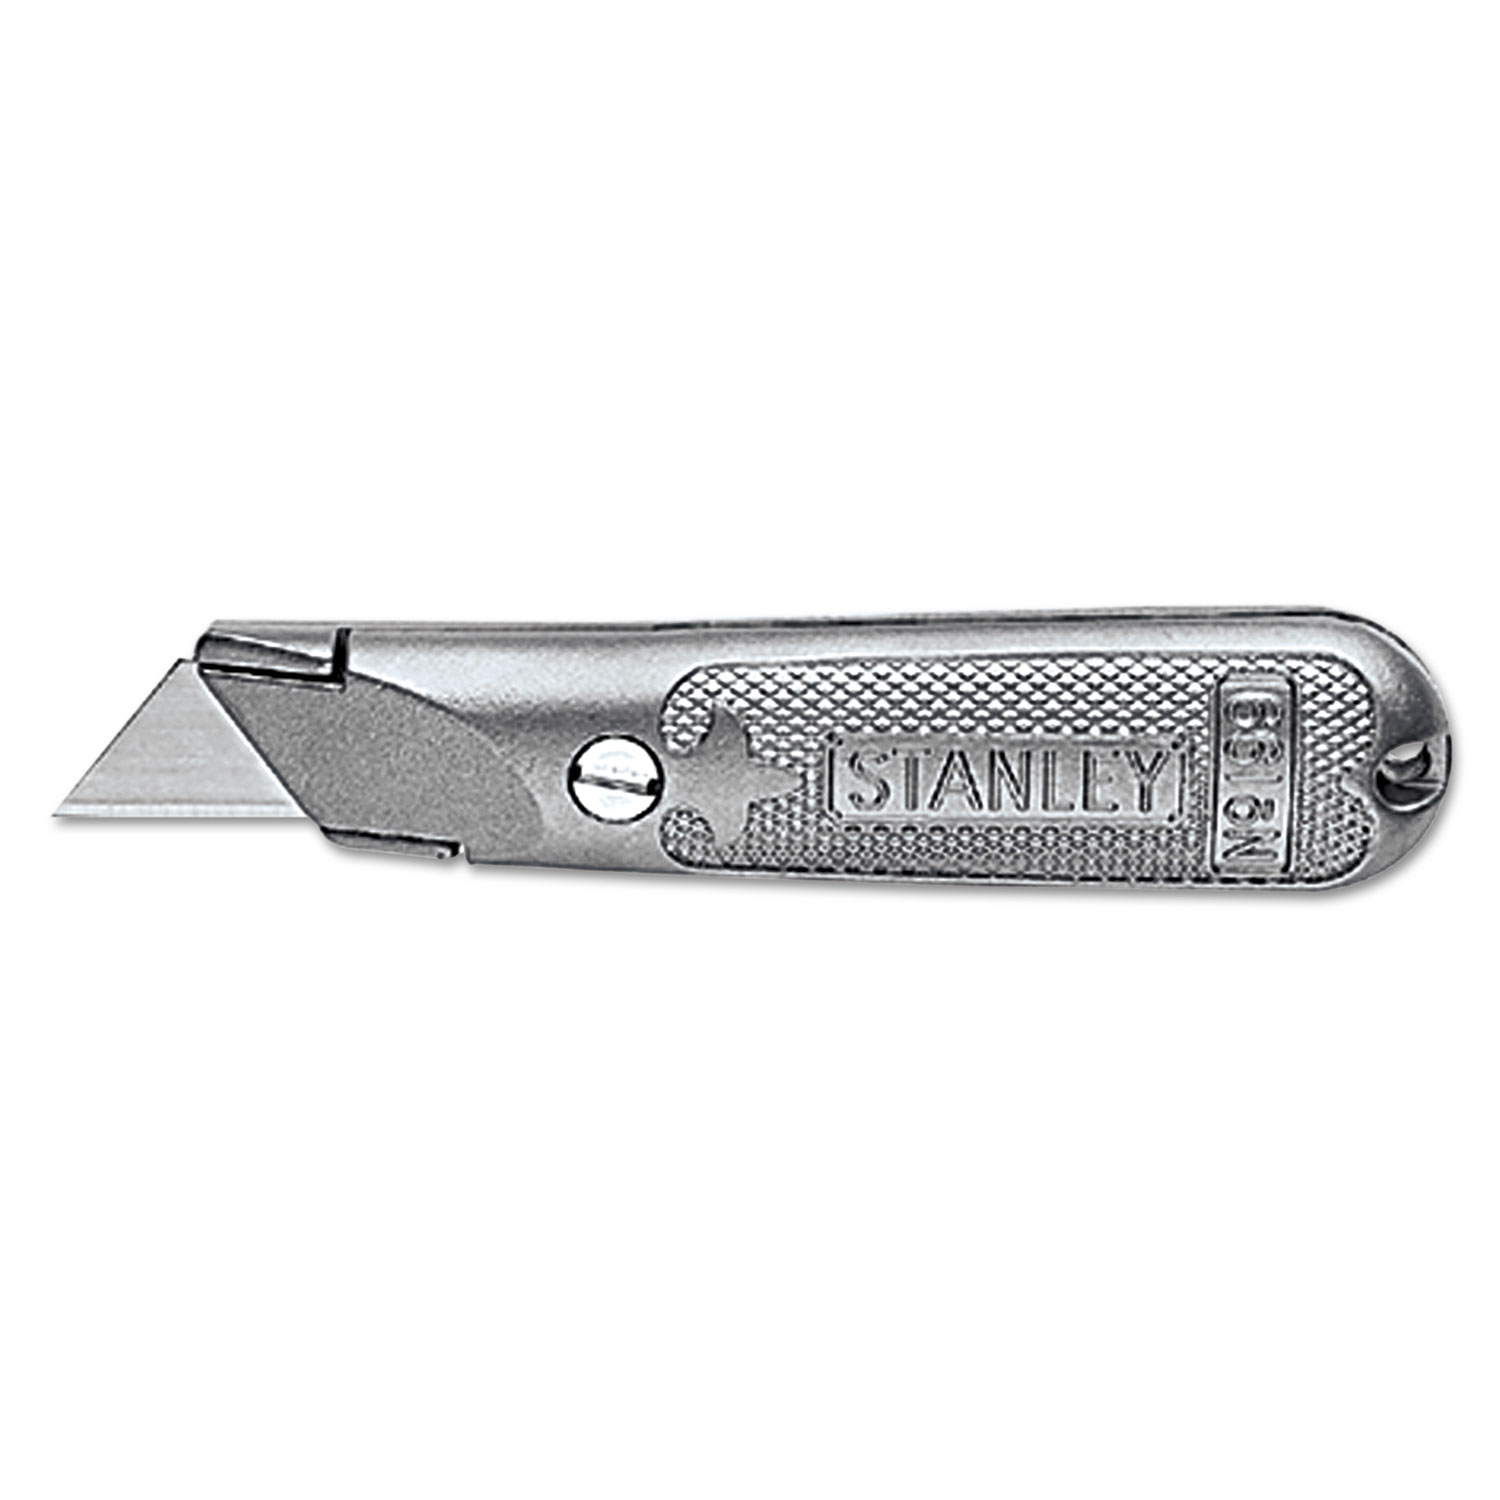 Classic 199 Heavy-Duty Fixed-Blade Utility Knife, 5 3/8 in